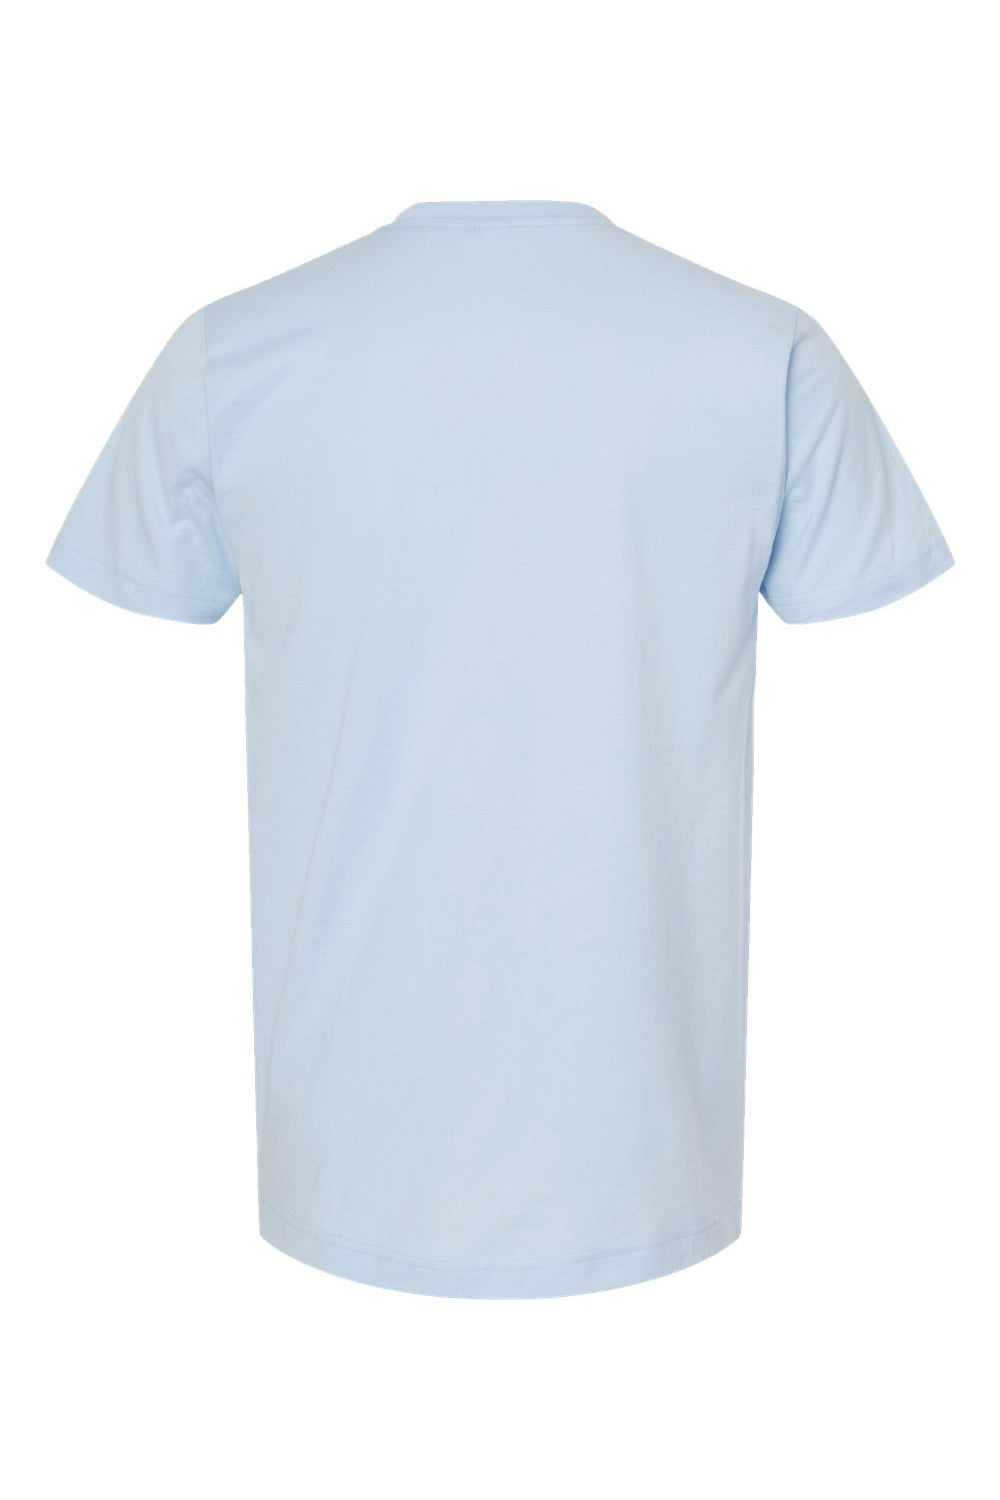 Tultex 202 Mens Fine Jersey Short Sleeve Crewneck T-Shirt Baby Blue Flat Back